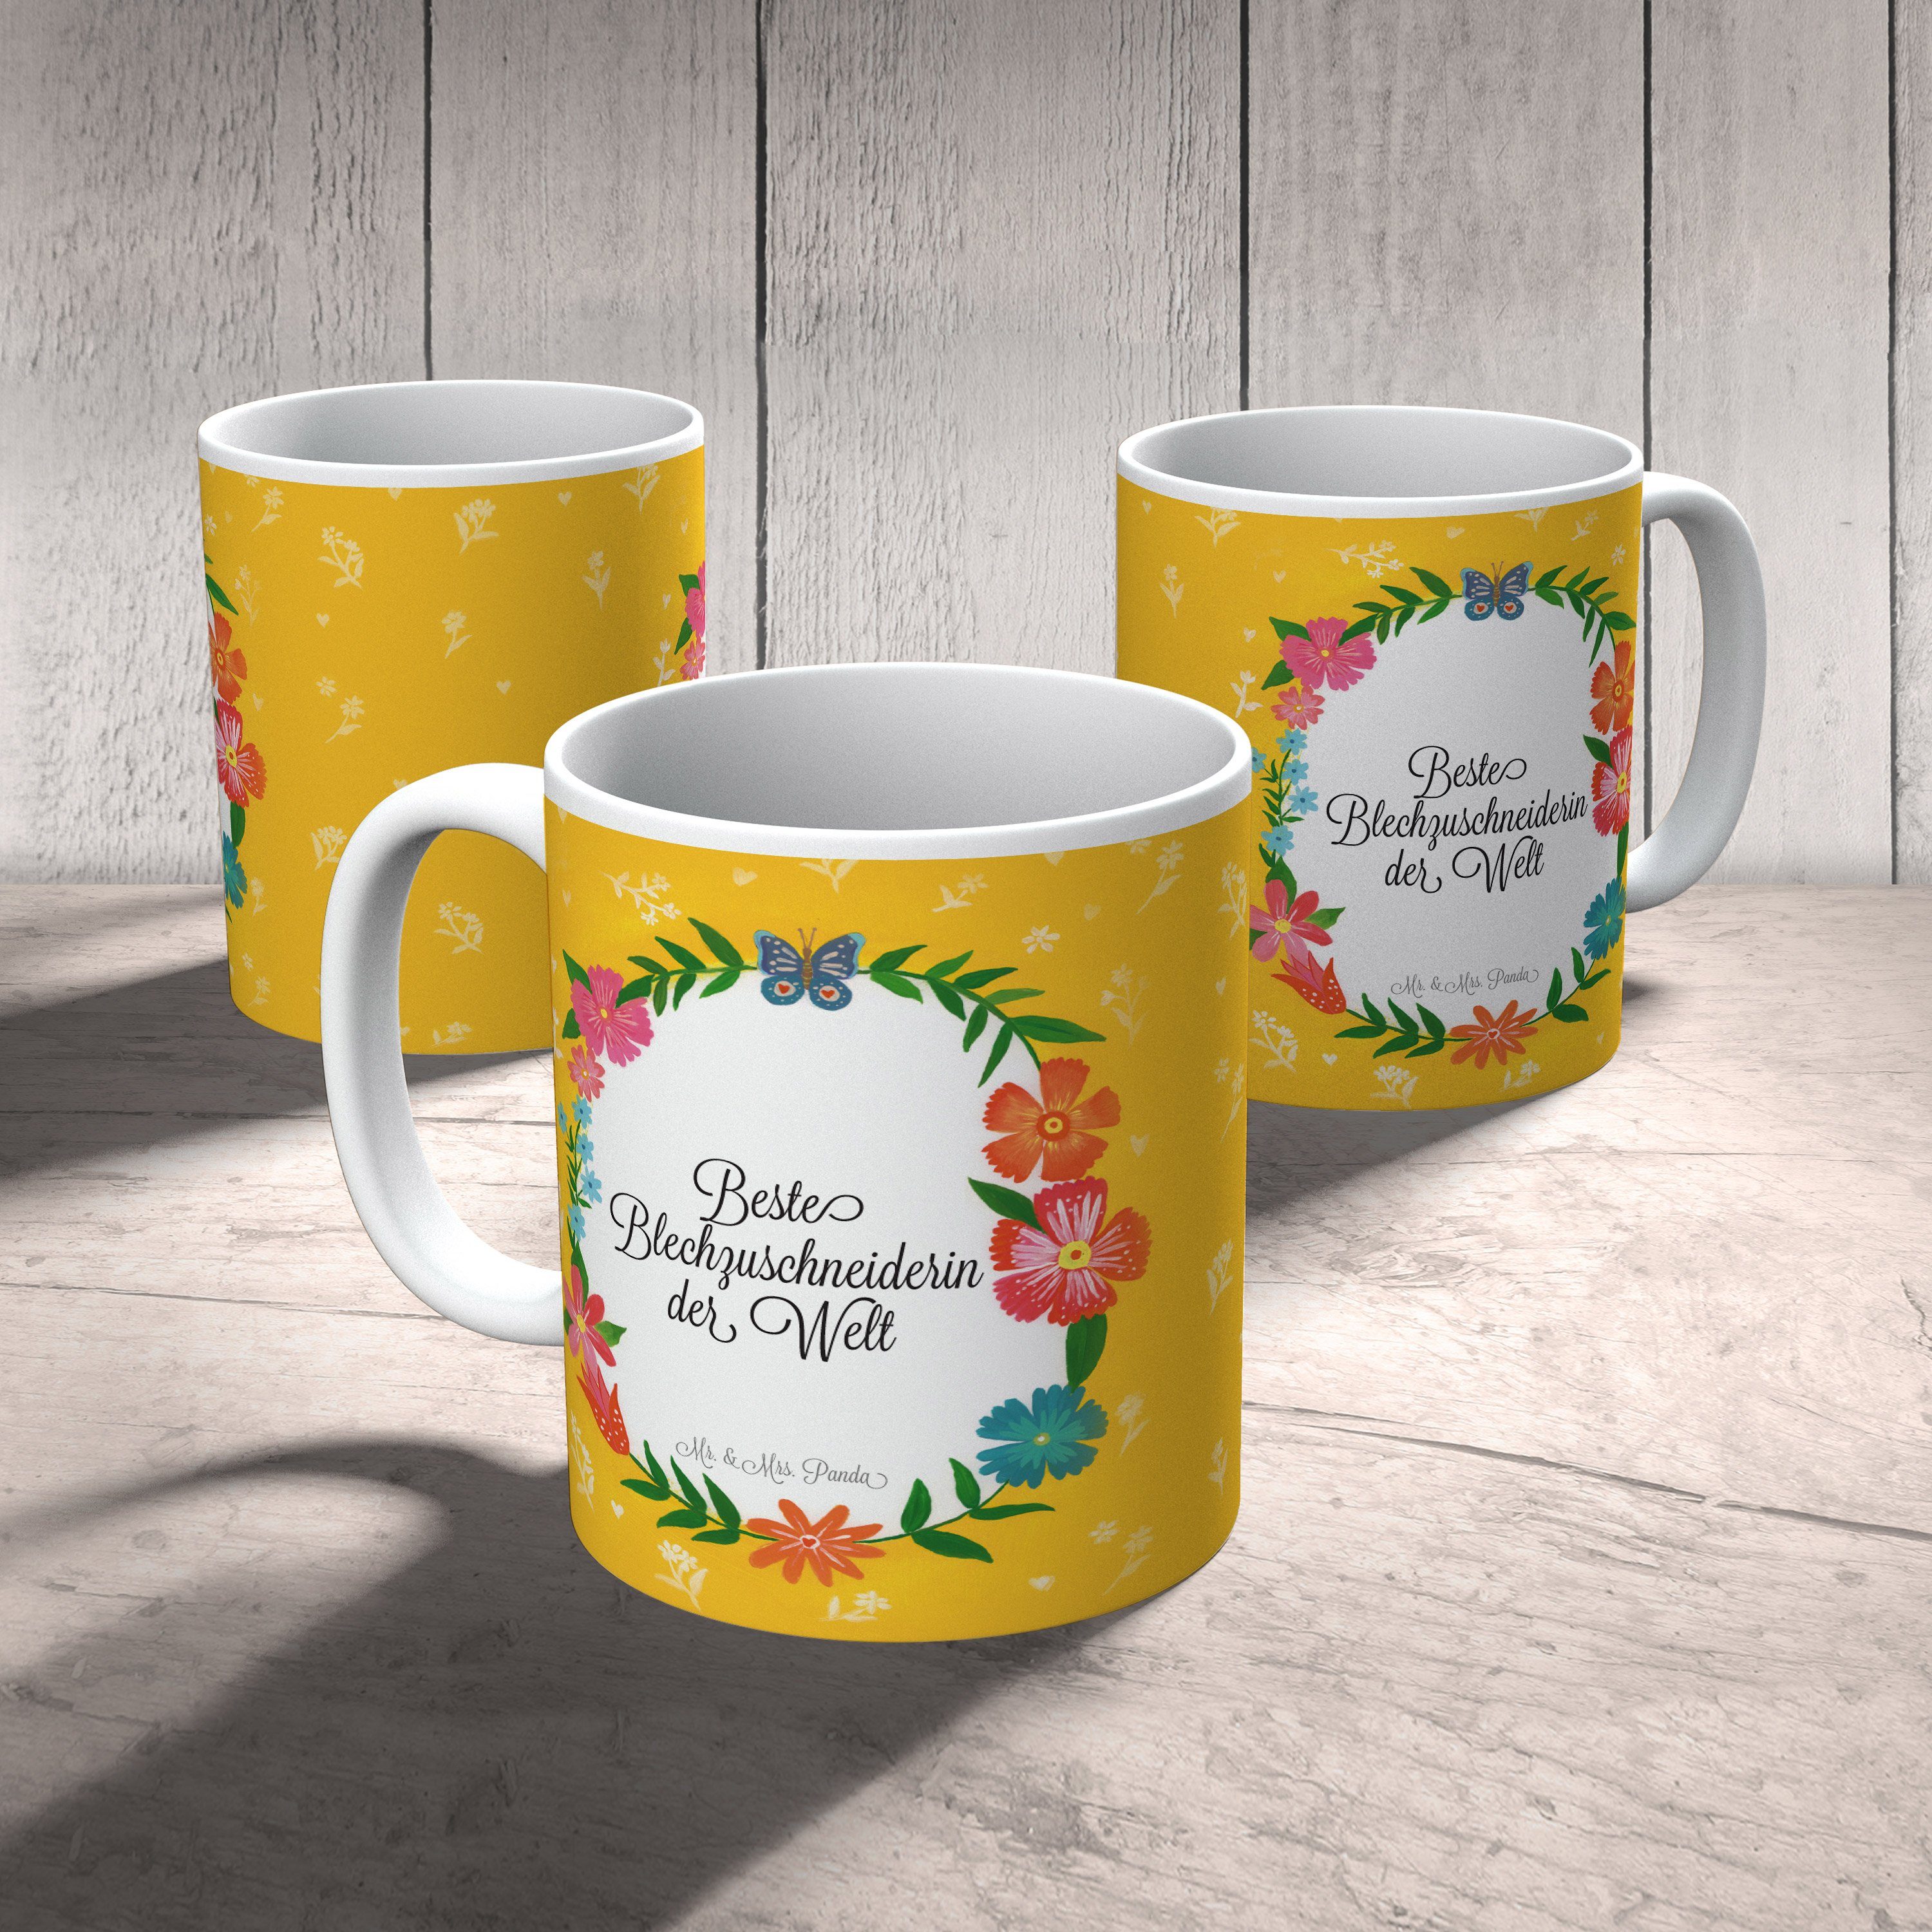 Mr. & Mrs. Panda Tasse Kaffeetasse, Geschenk Geschenk, Keramik Tasse, - Abschied, Blechzuschneiderin